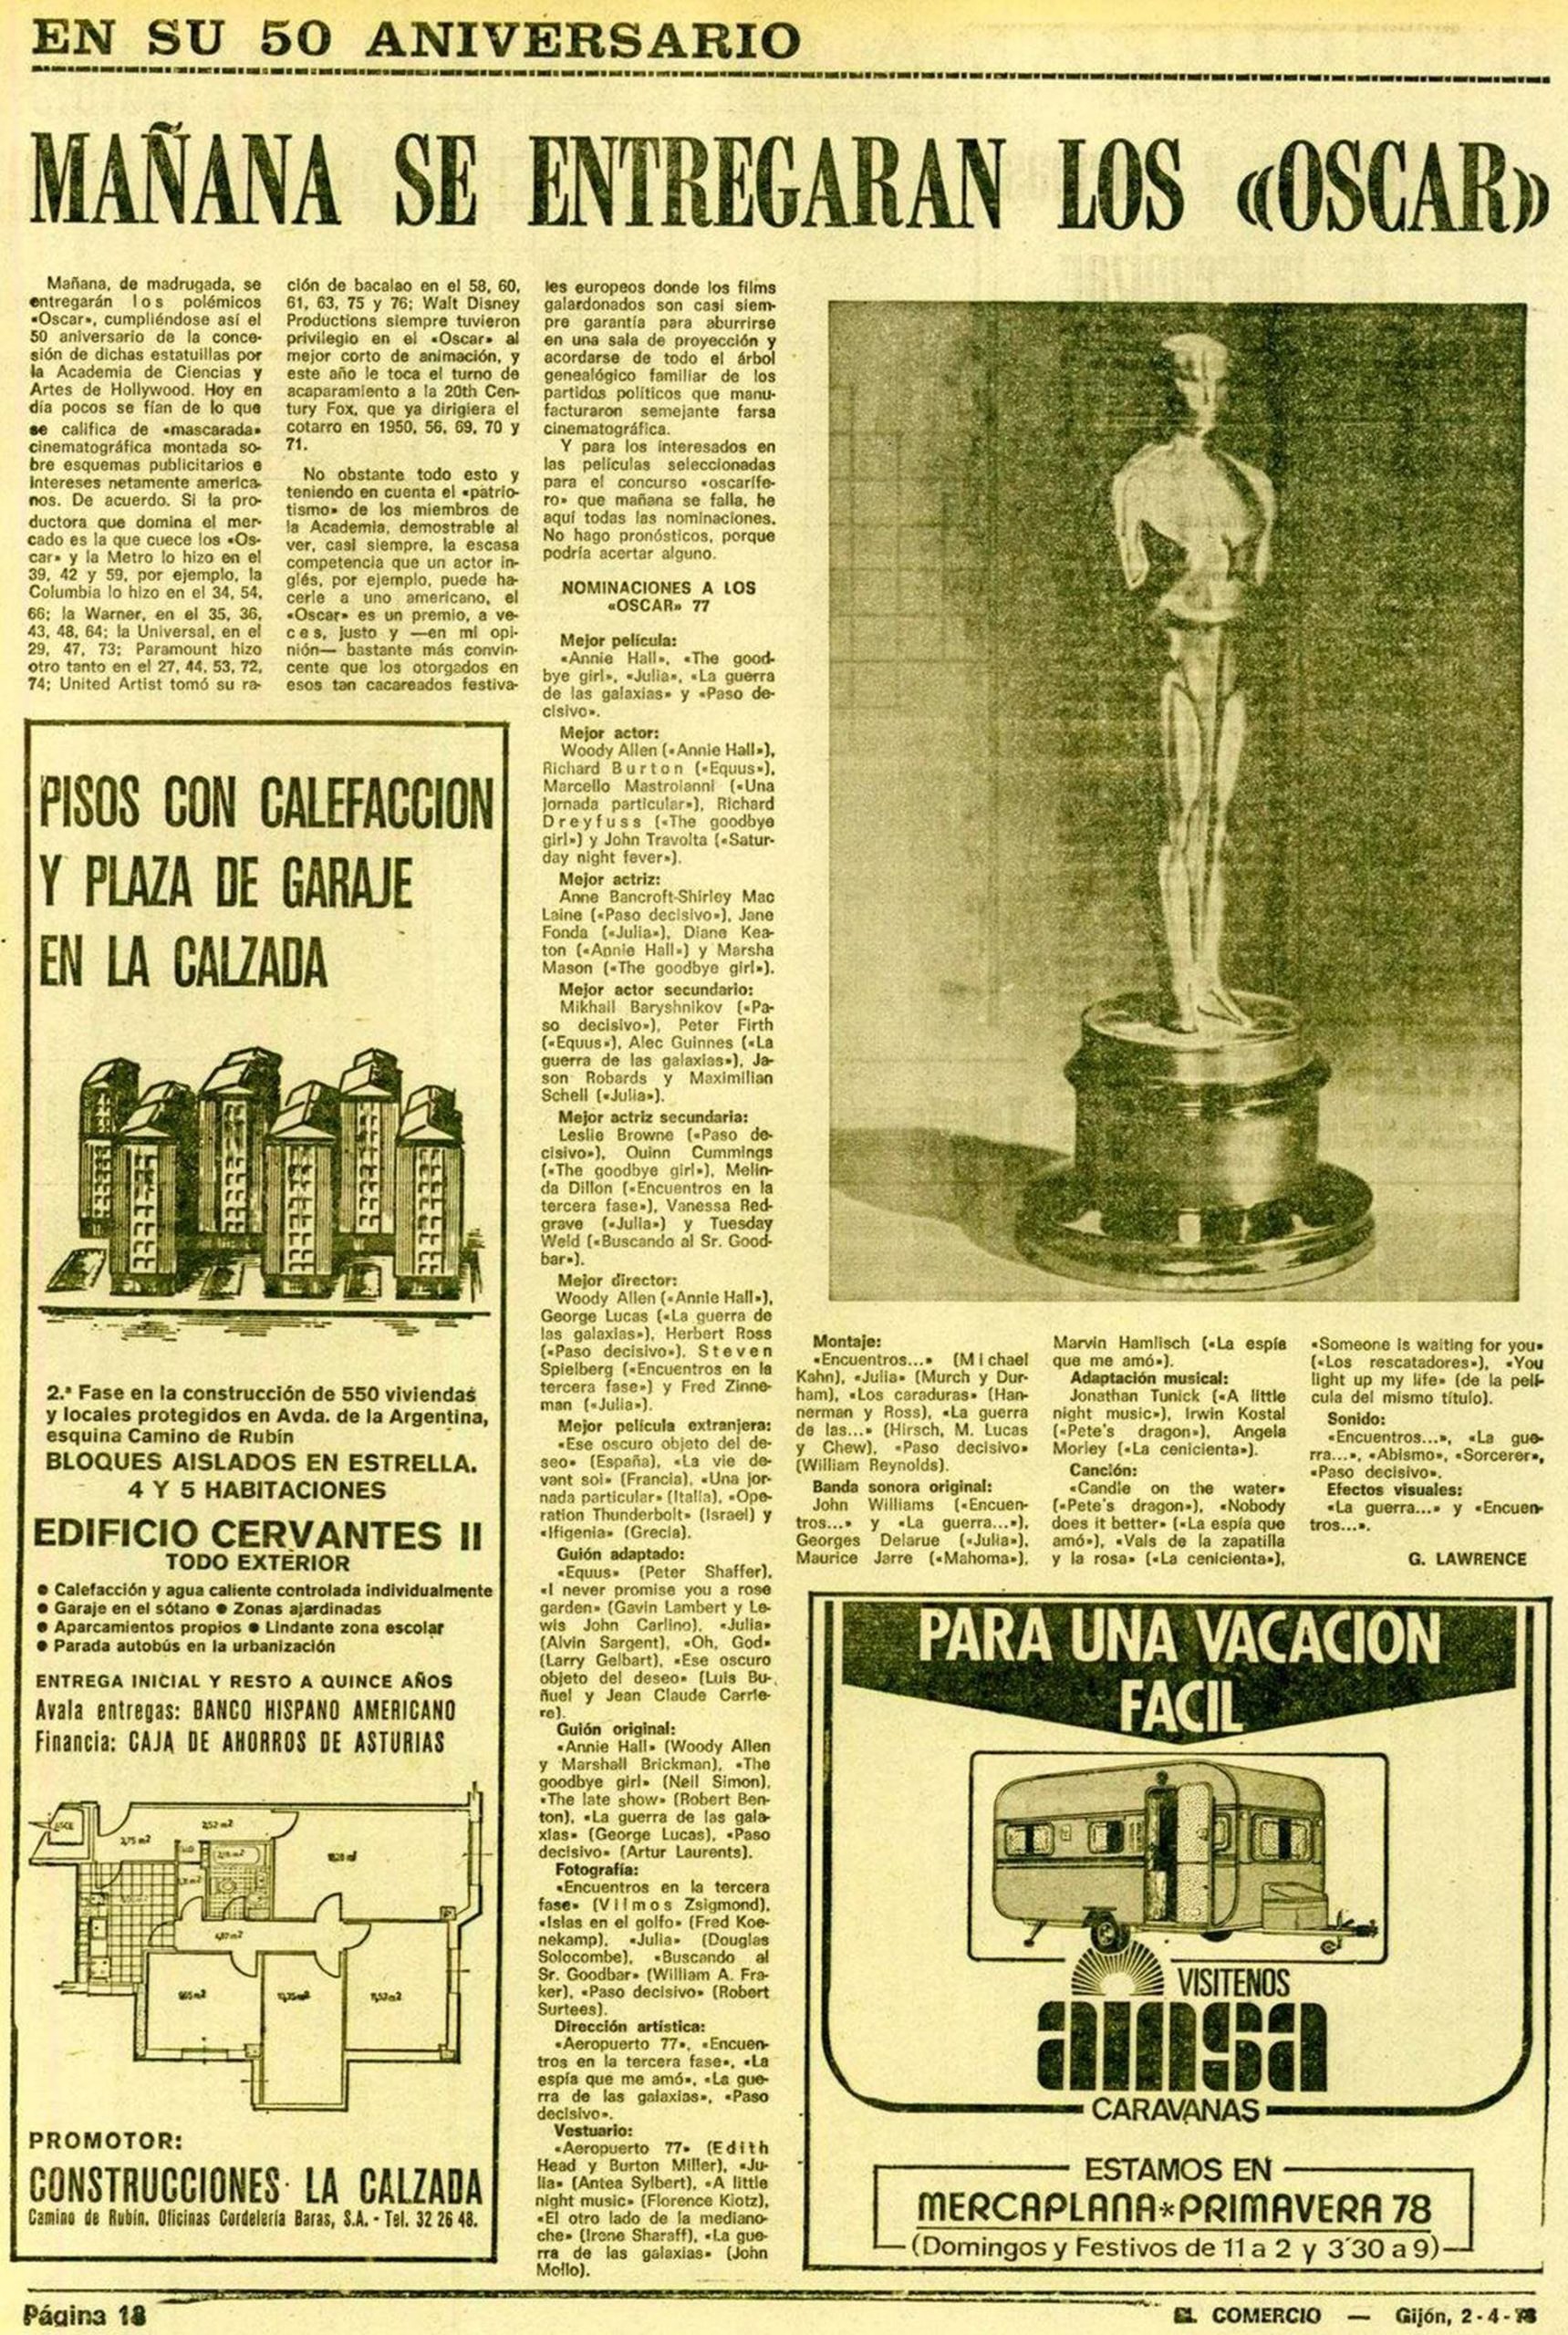 10 1978 04 02 El Comercio Gijon 18 Oscar cancion scaled